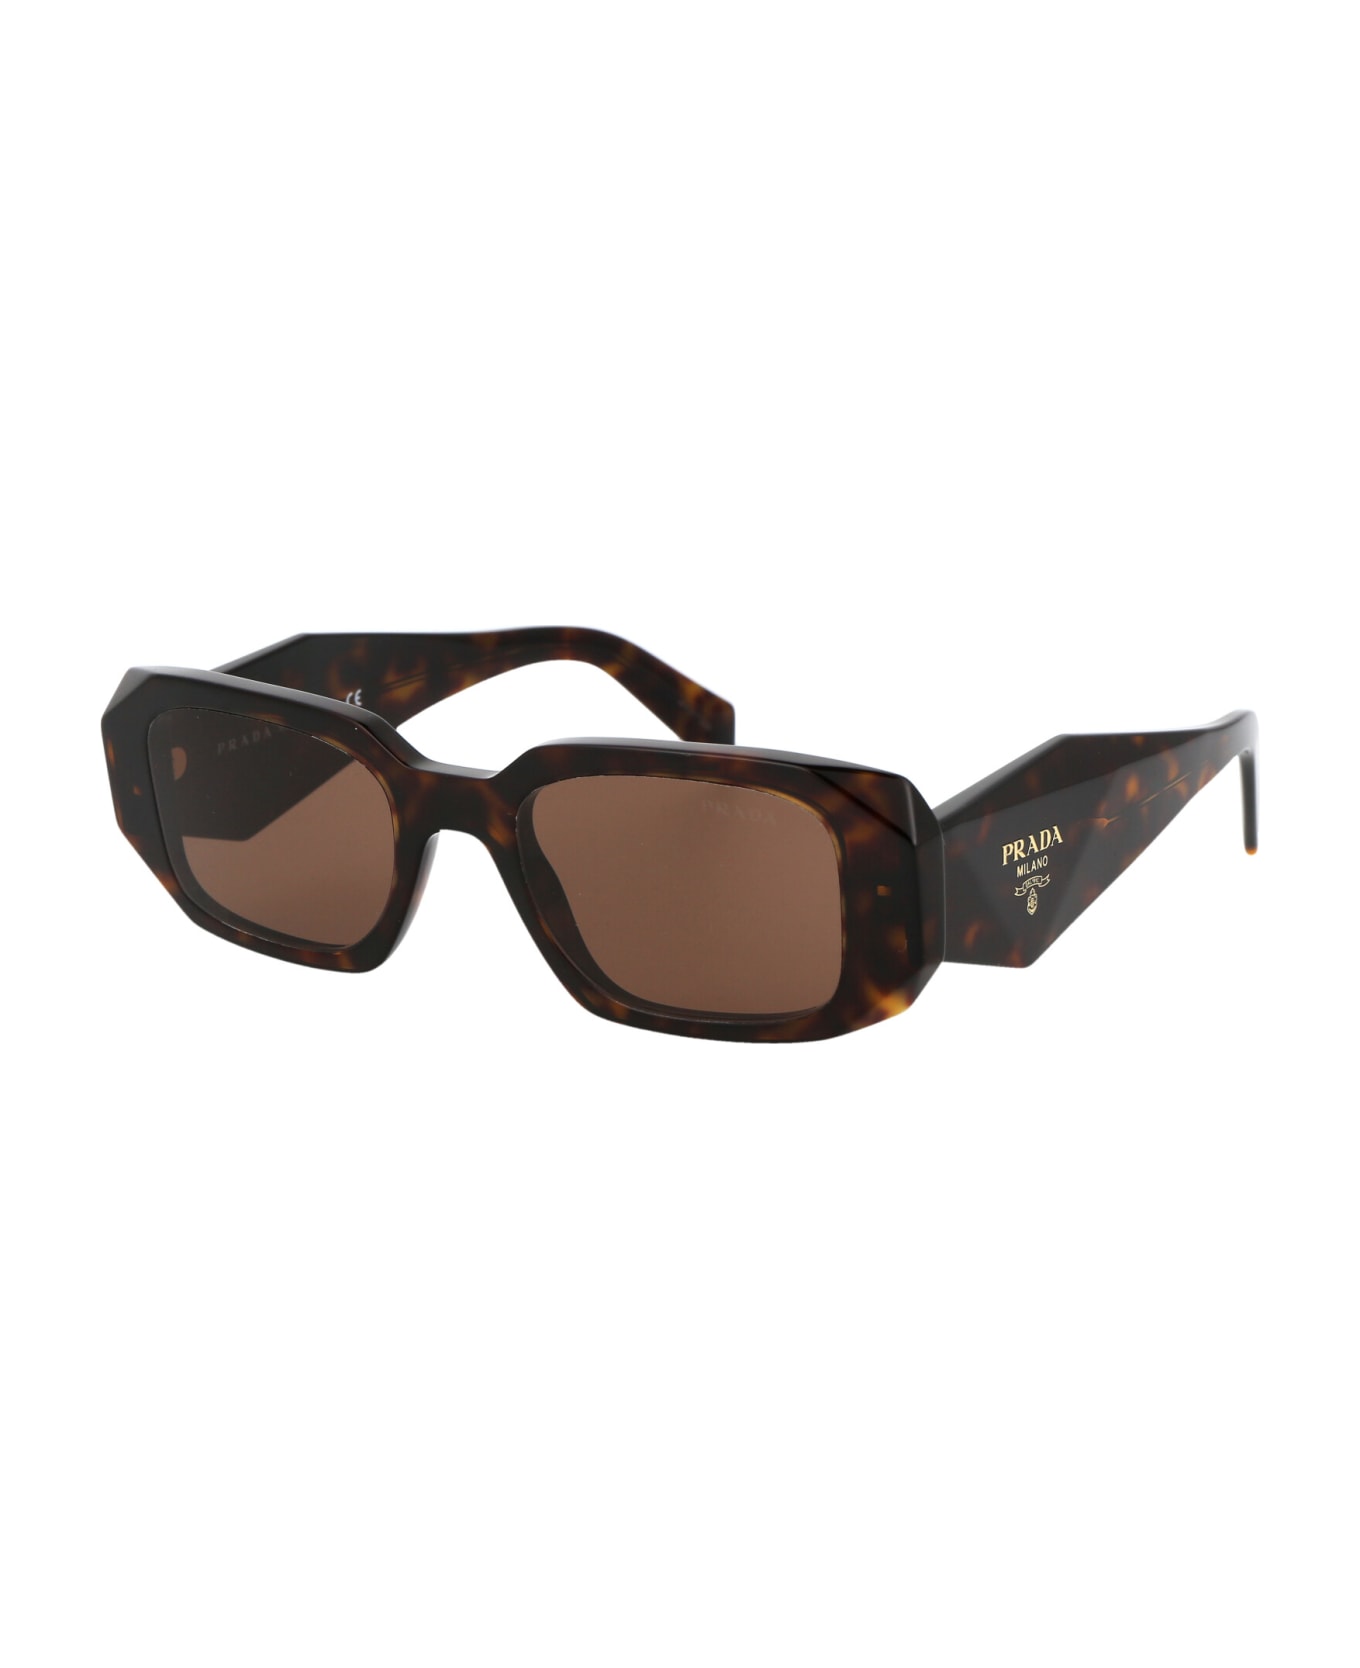 Prada Eyewear 0pr 17ws Sunglasses - 2AU8C1 TORTOISE